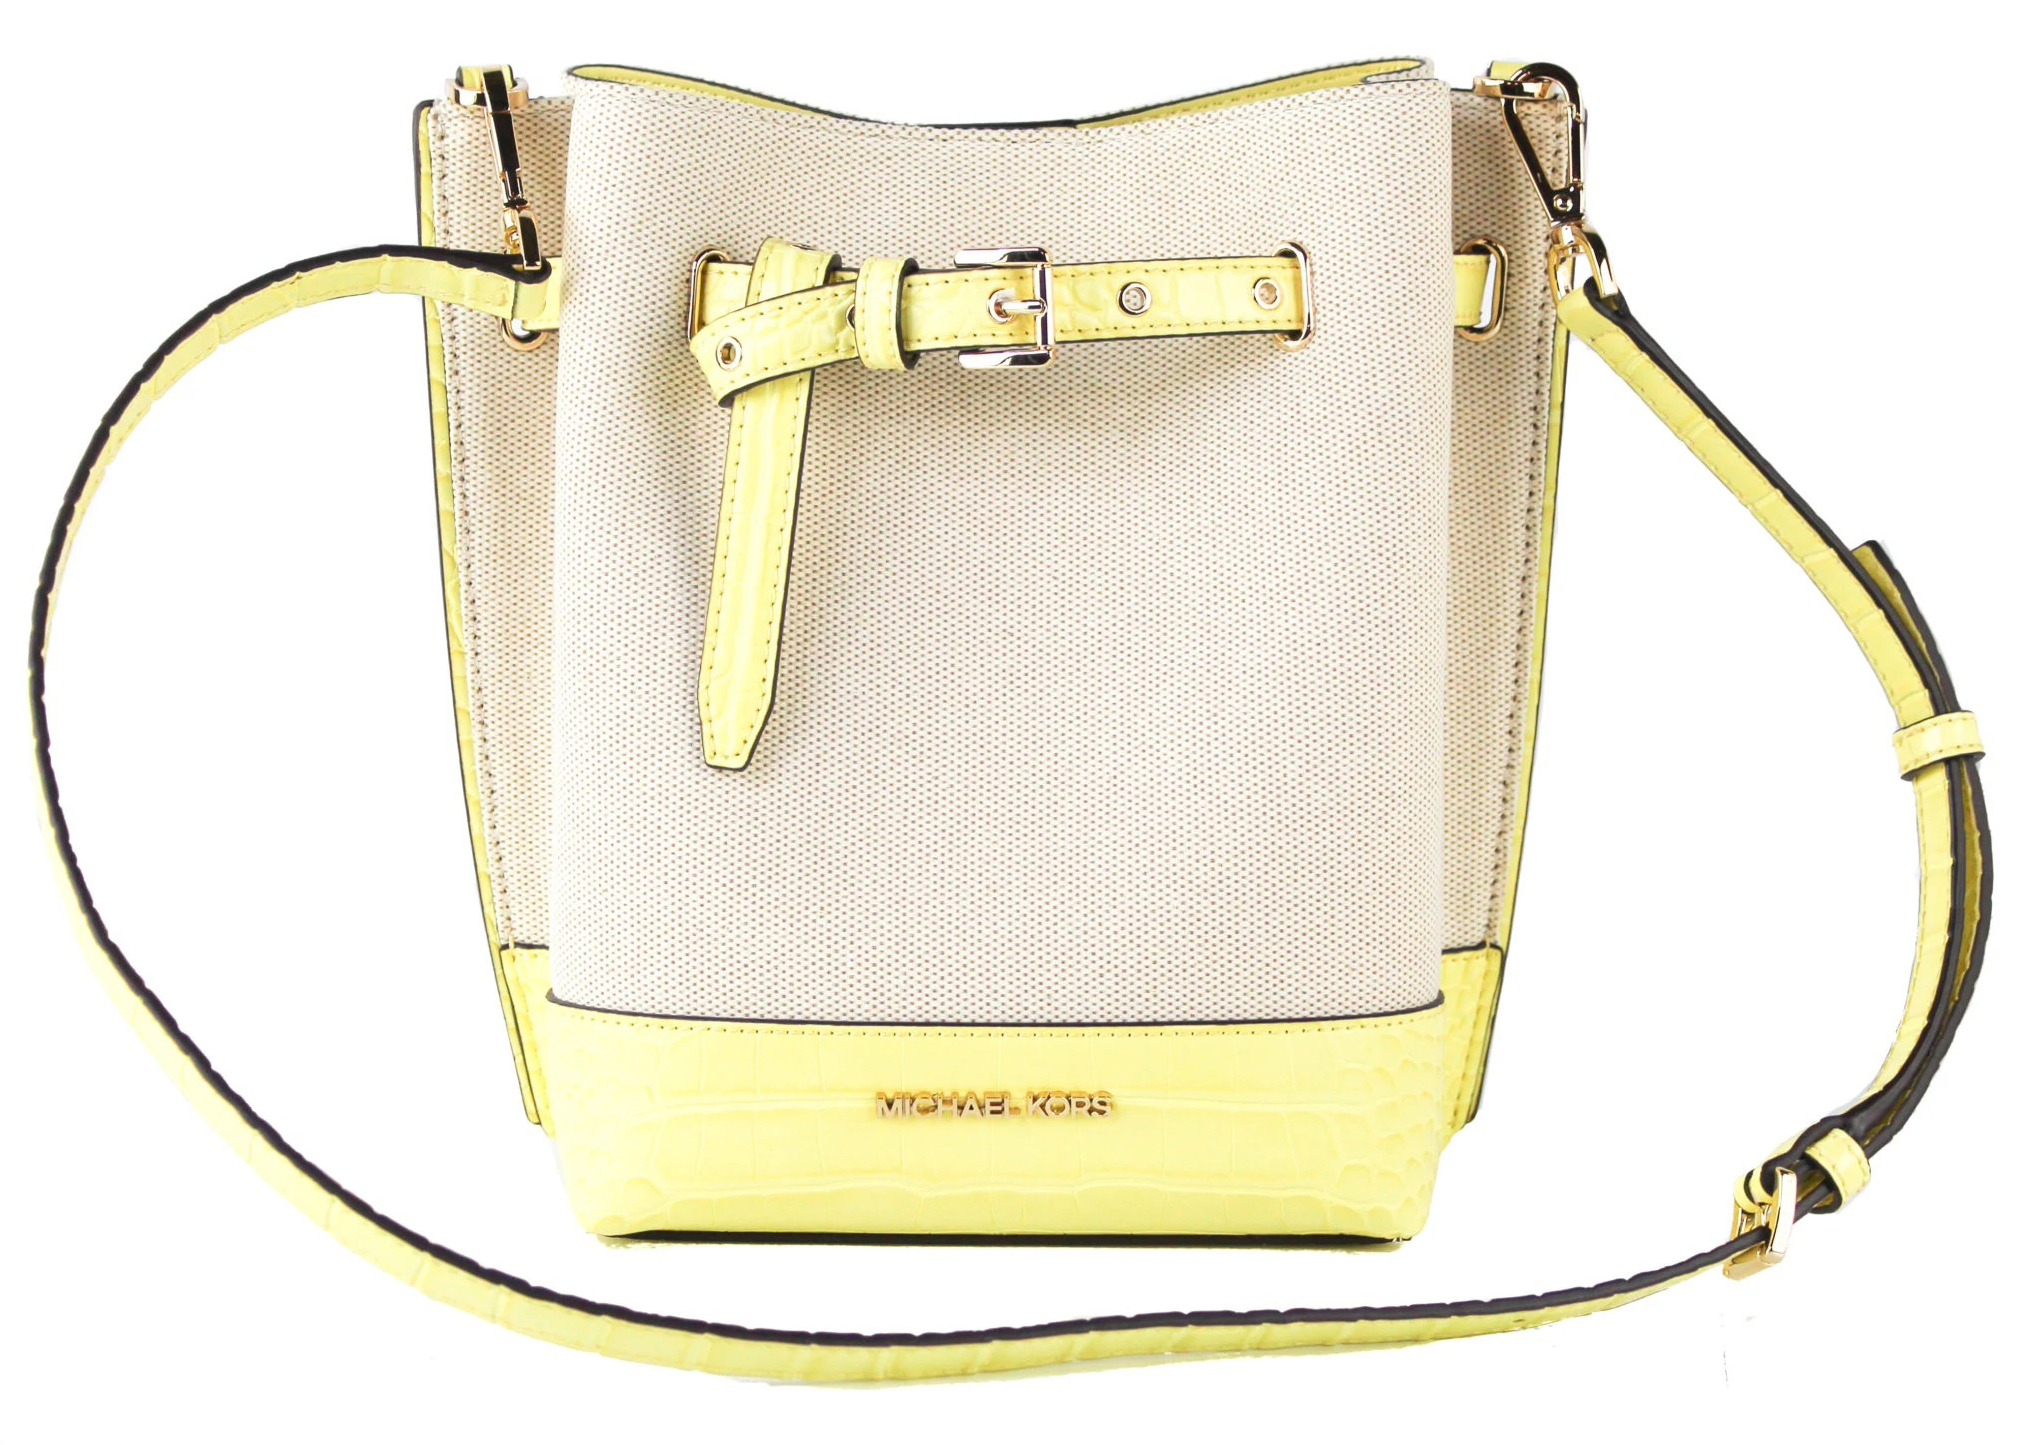 Michael Kors Emilia Small Black Pebbled Leather Bucket Bag Messenger Handbag  | eBay